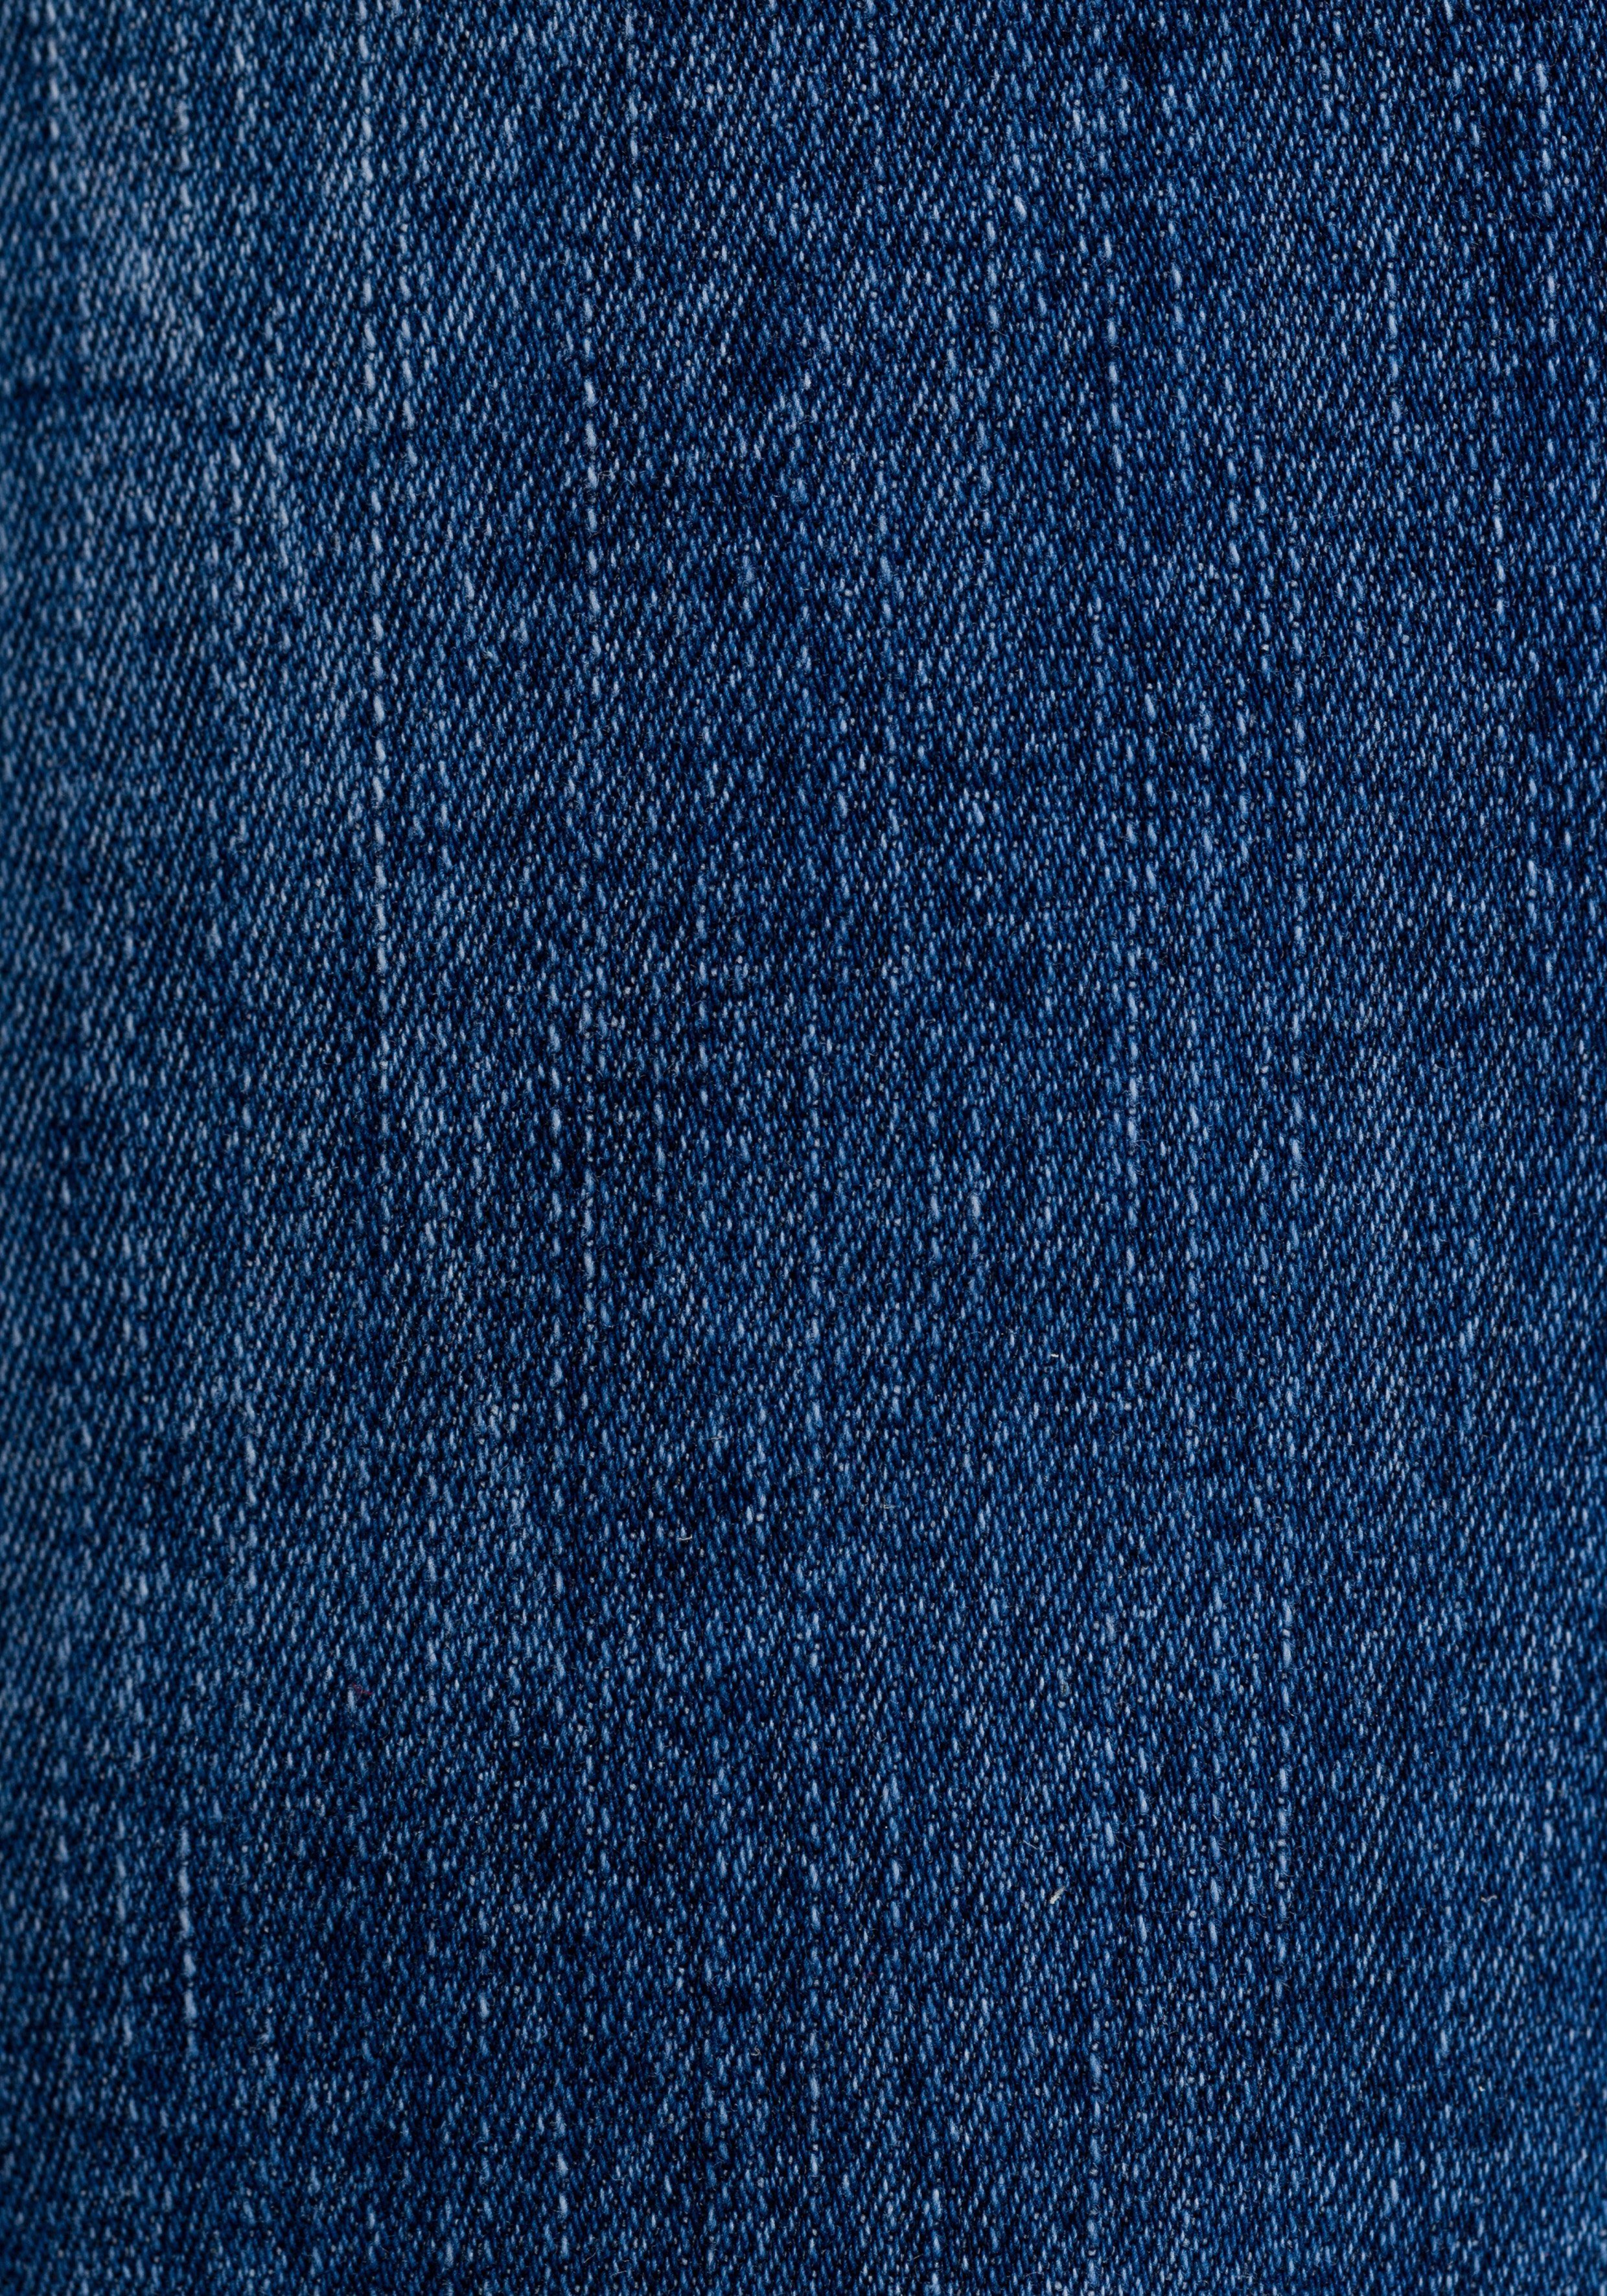 Knopfleiste offener Slim-fit-Jeans mit mid blue 94CARLI GANG